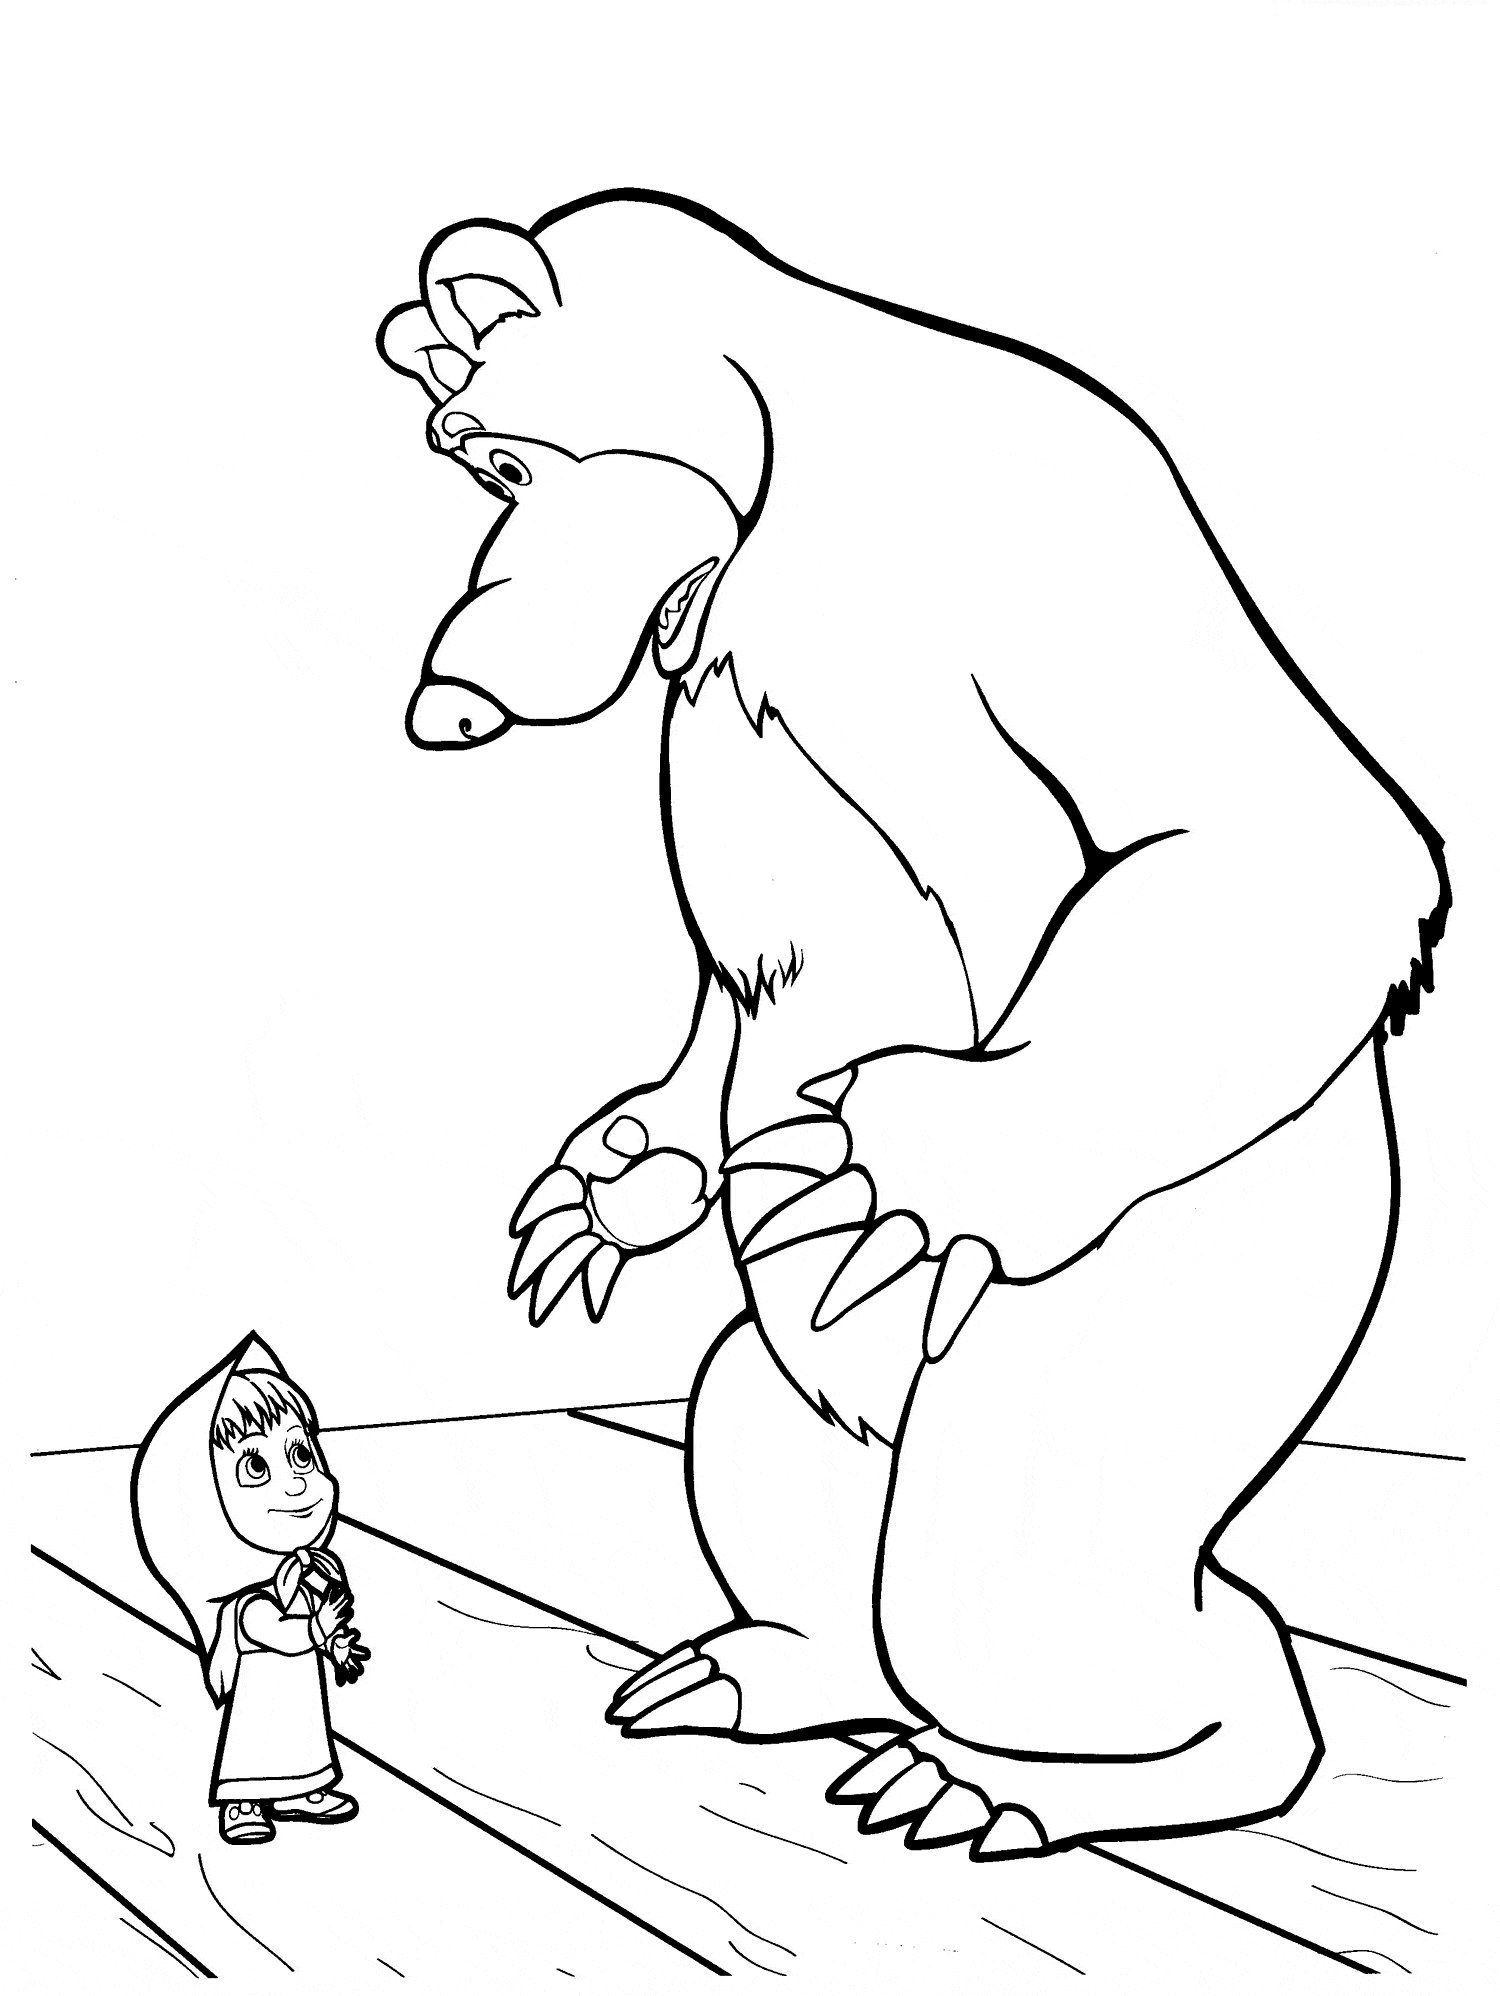 Masha and the bear coloring page